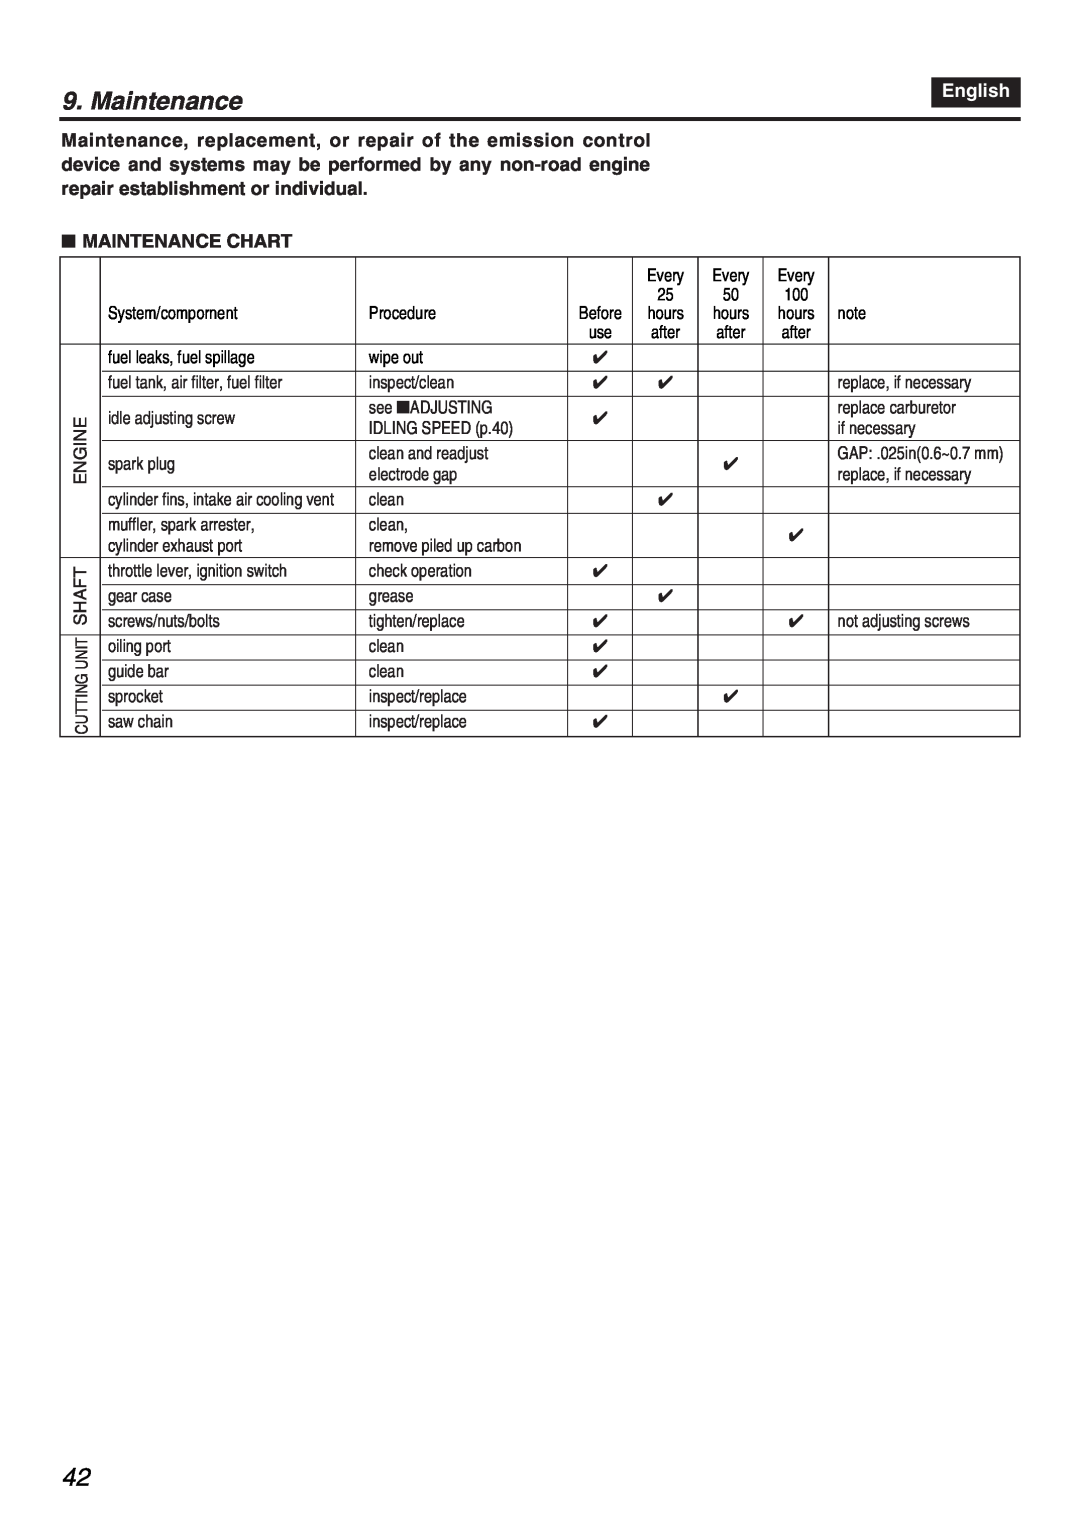 Zenoah PSZ2401 manual English, Maintenance Chart 